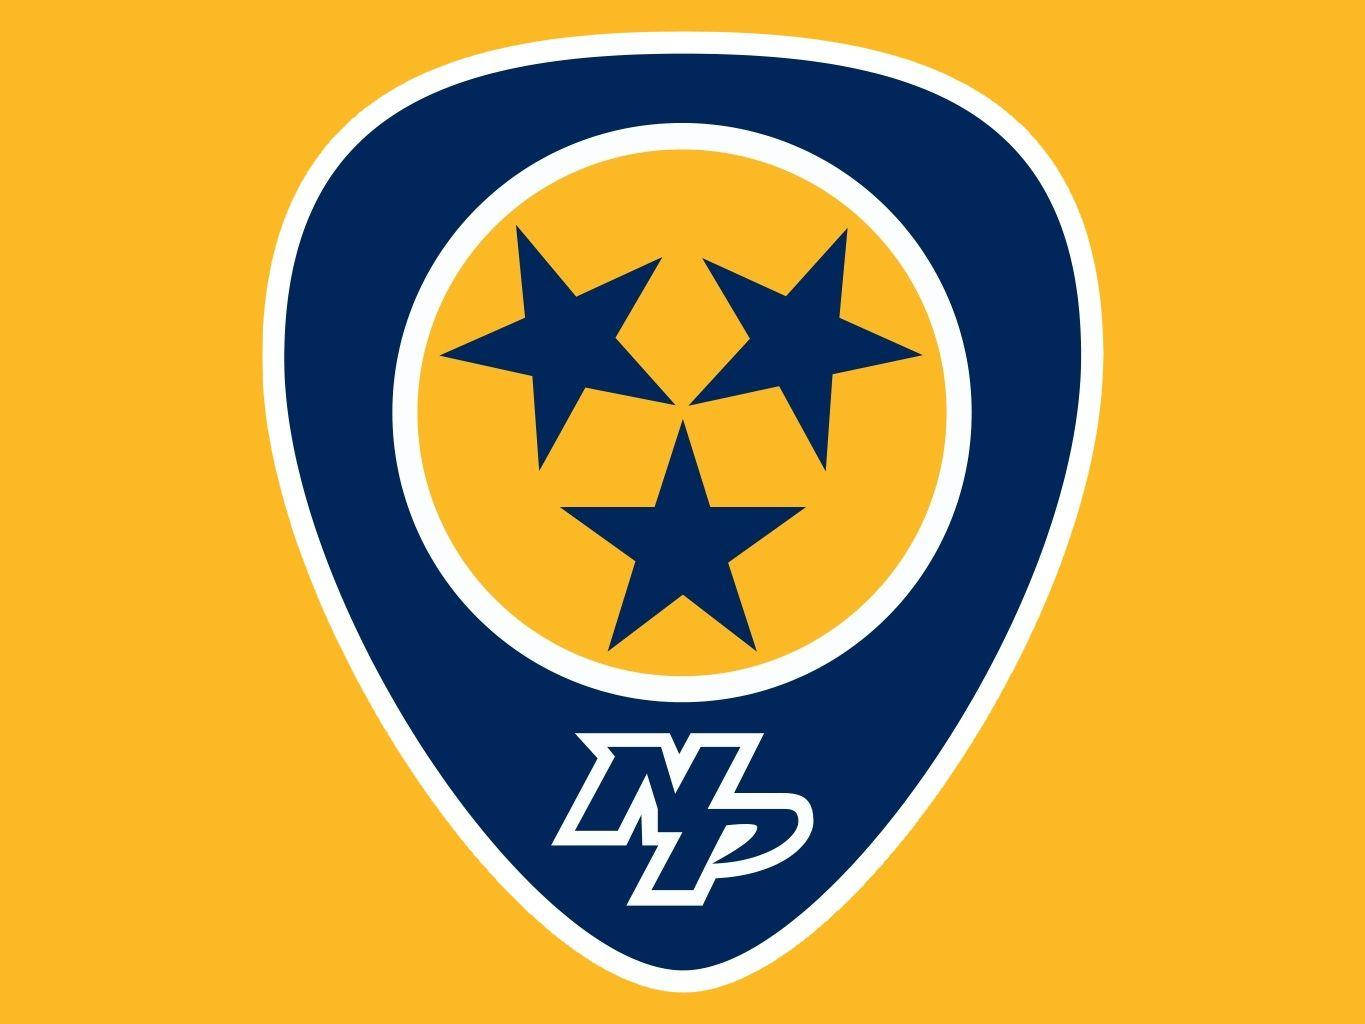 Nashville Predators' Logo Depicted In The Golden Ball And Stars.